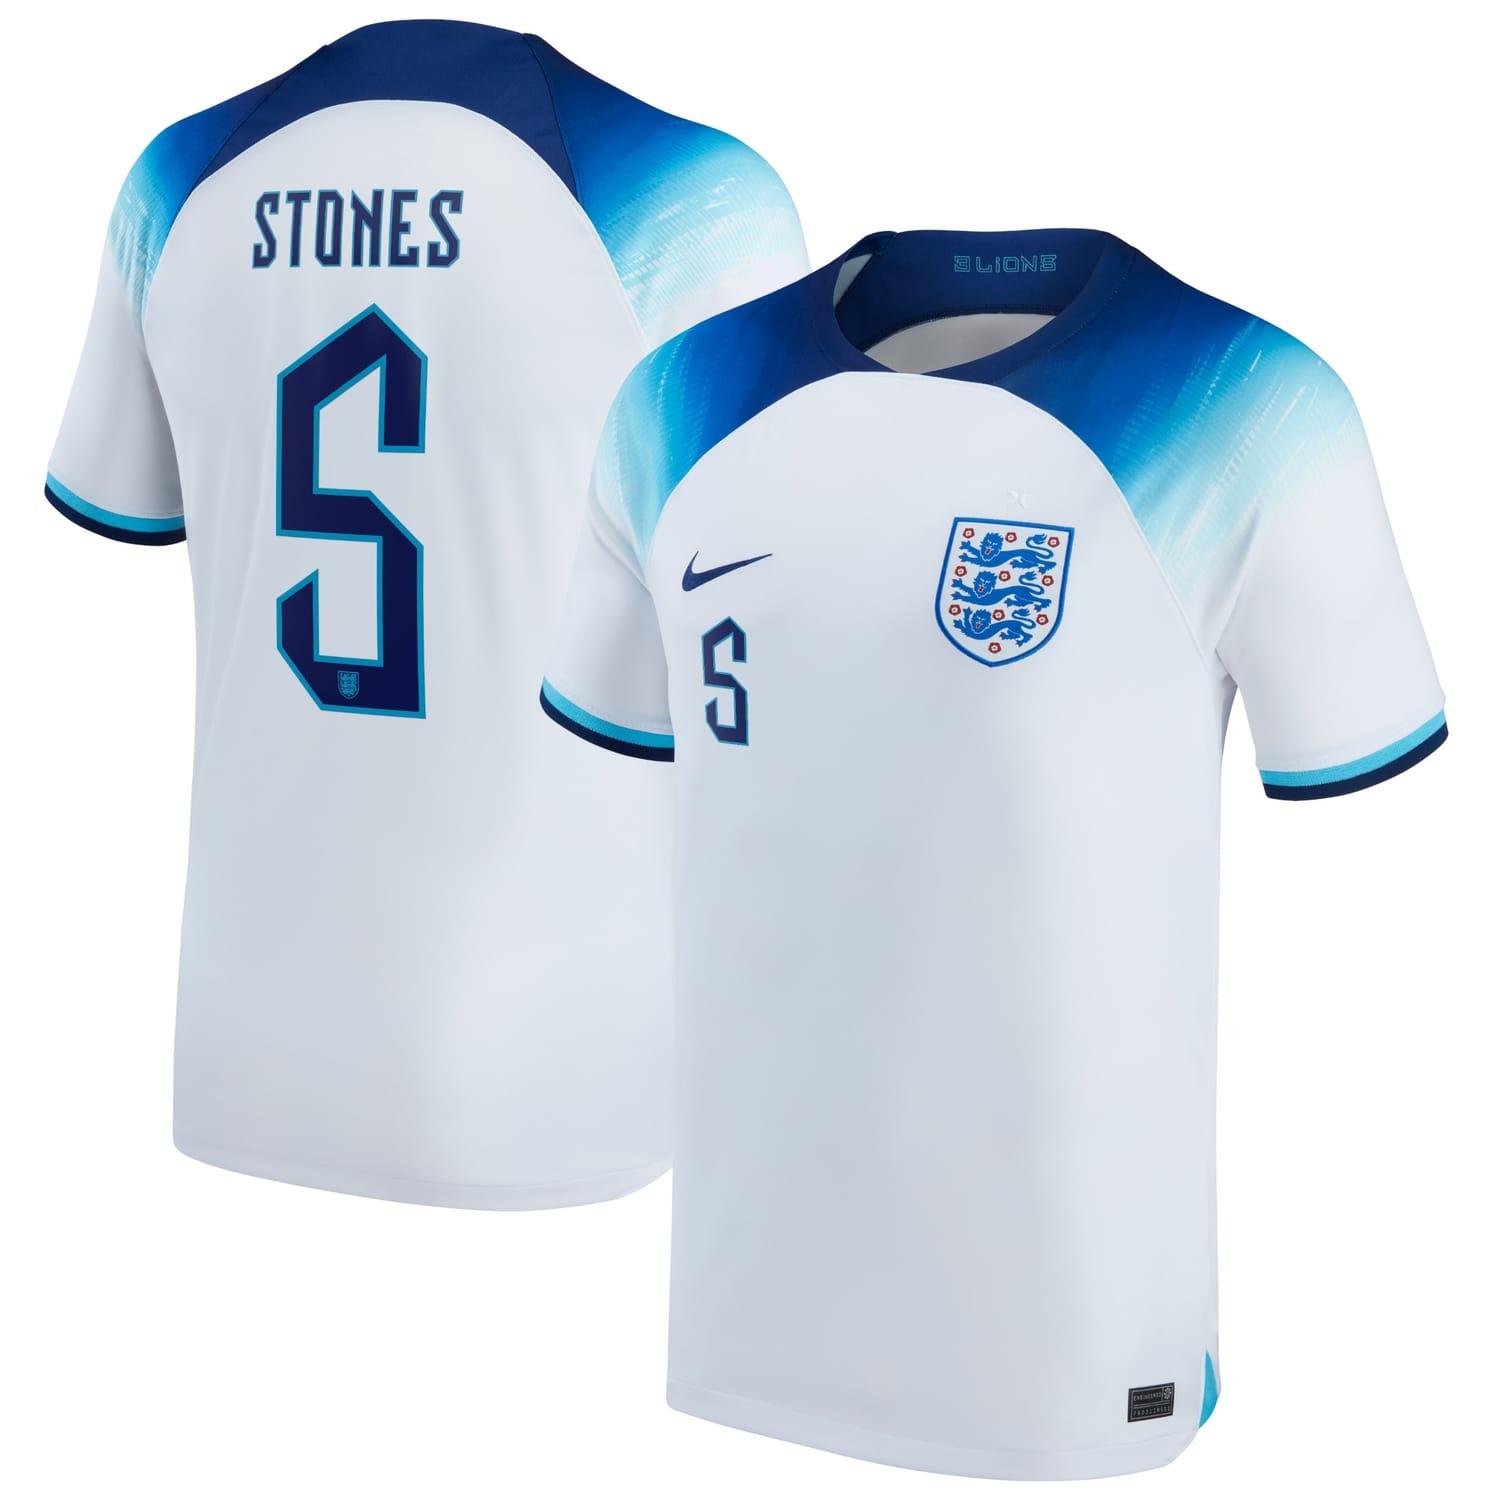 England National Team Home Jersey Shirt 2022 player John Stones 5 printing for Men